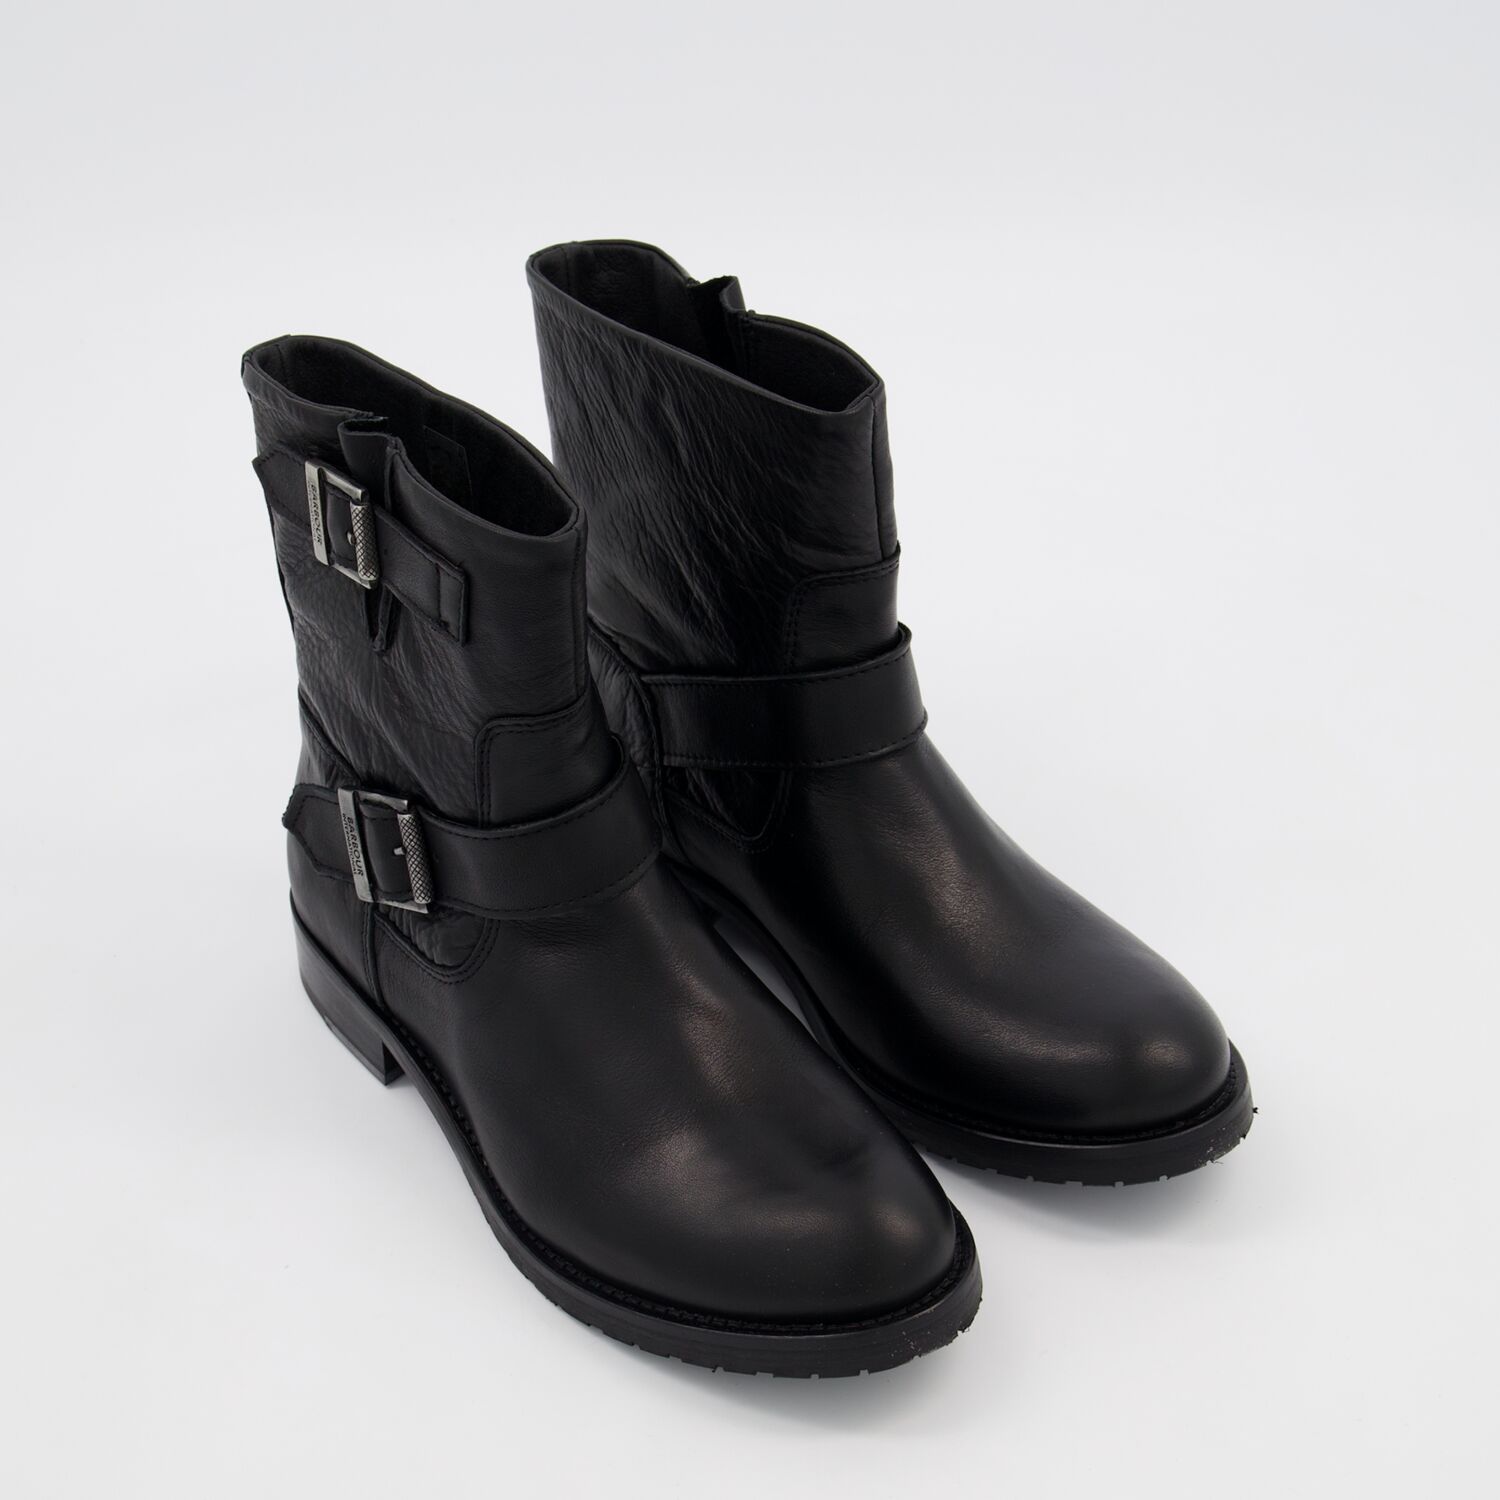 Black Leather Lima Flat Ankle Boots - TK Maxx UK